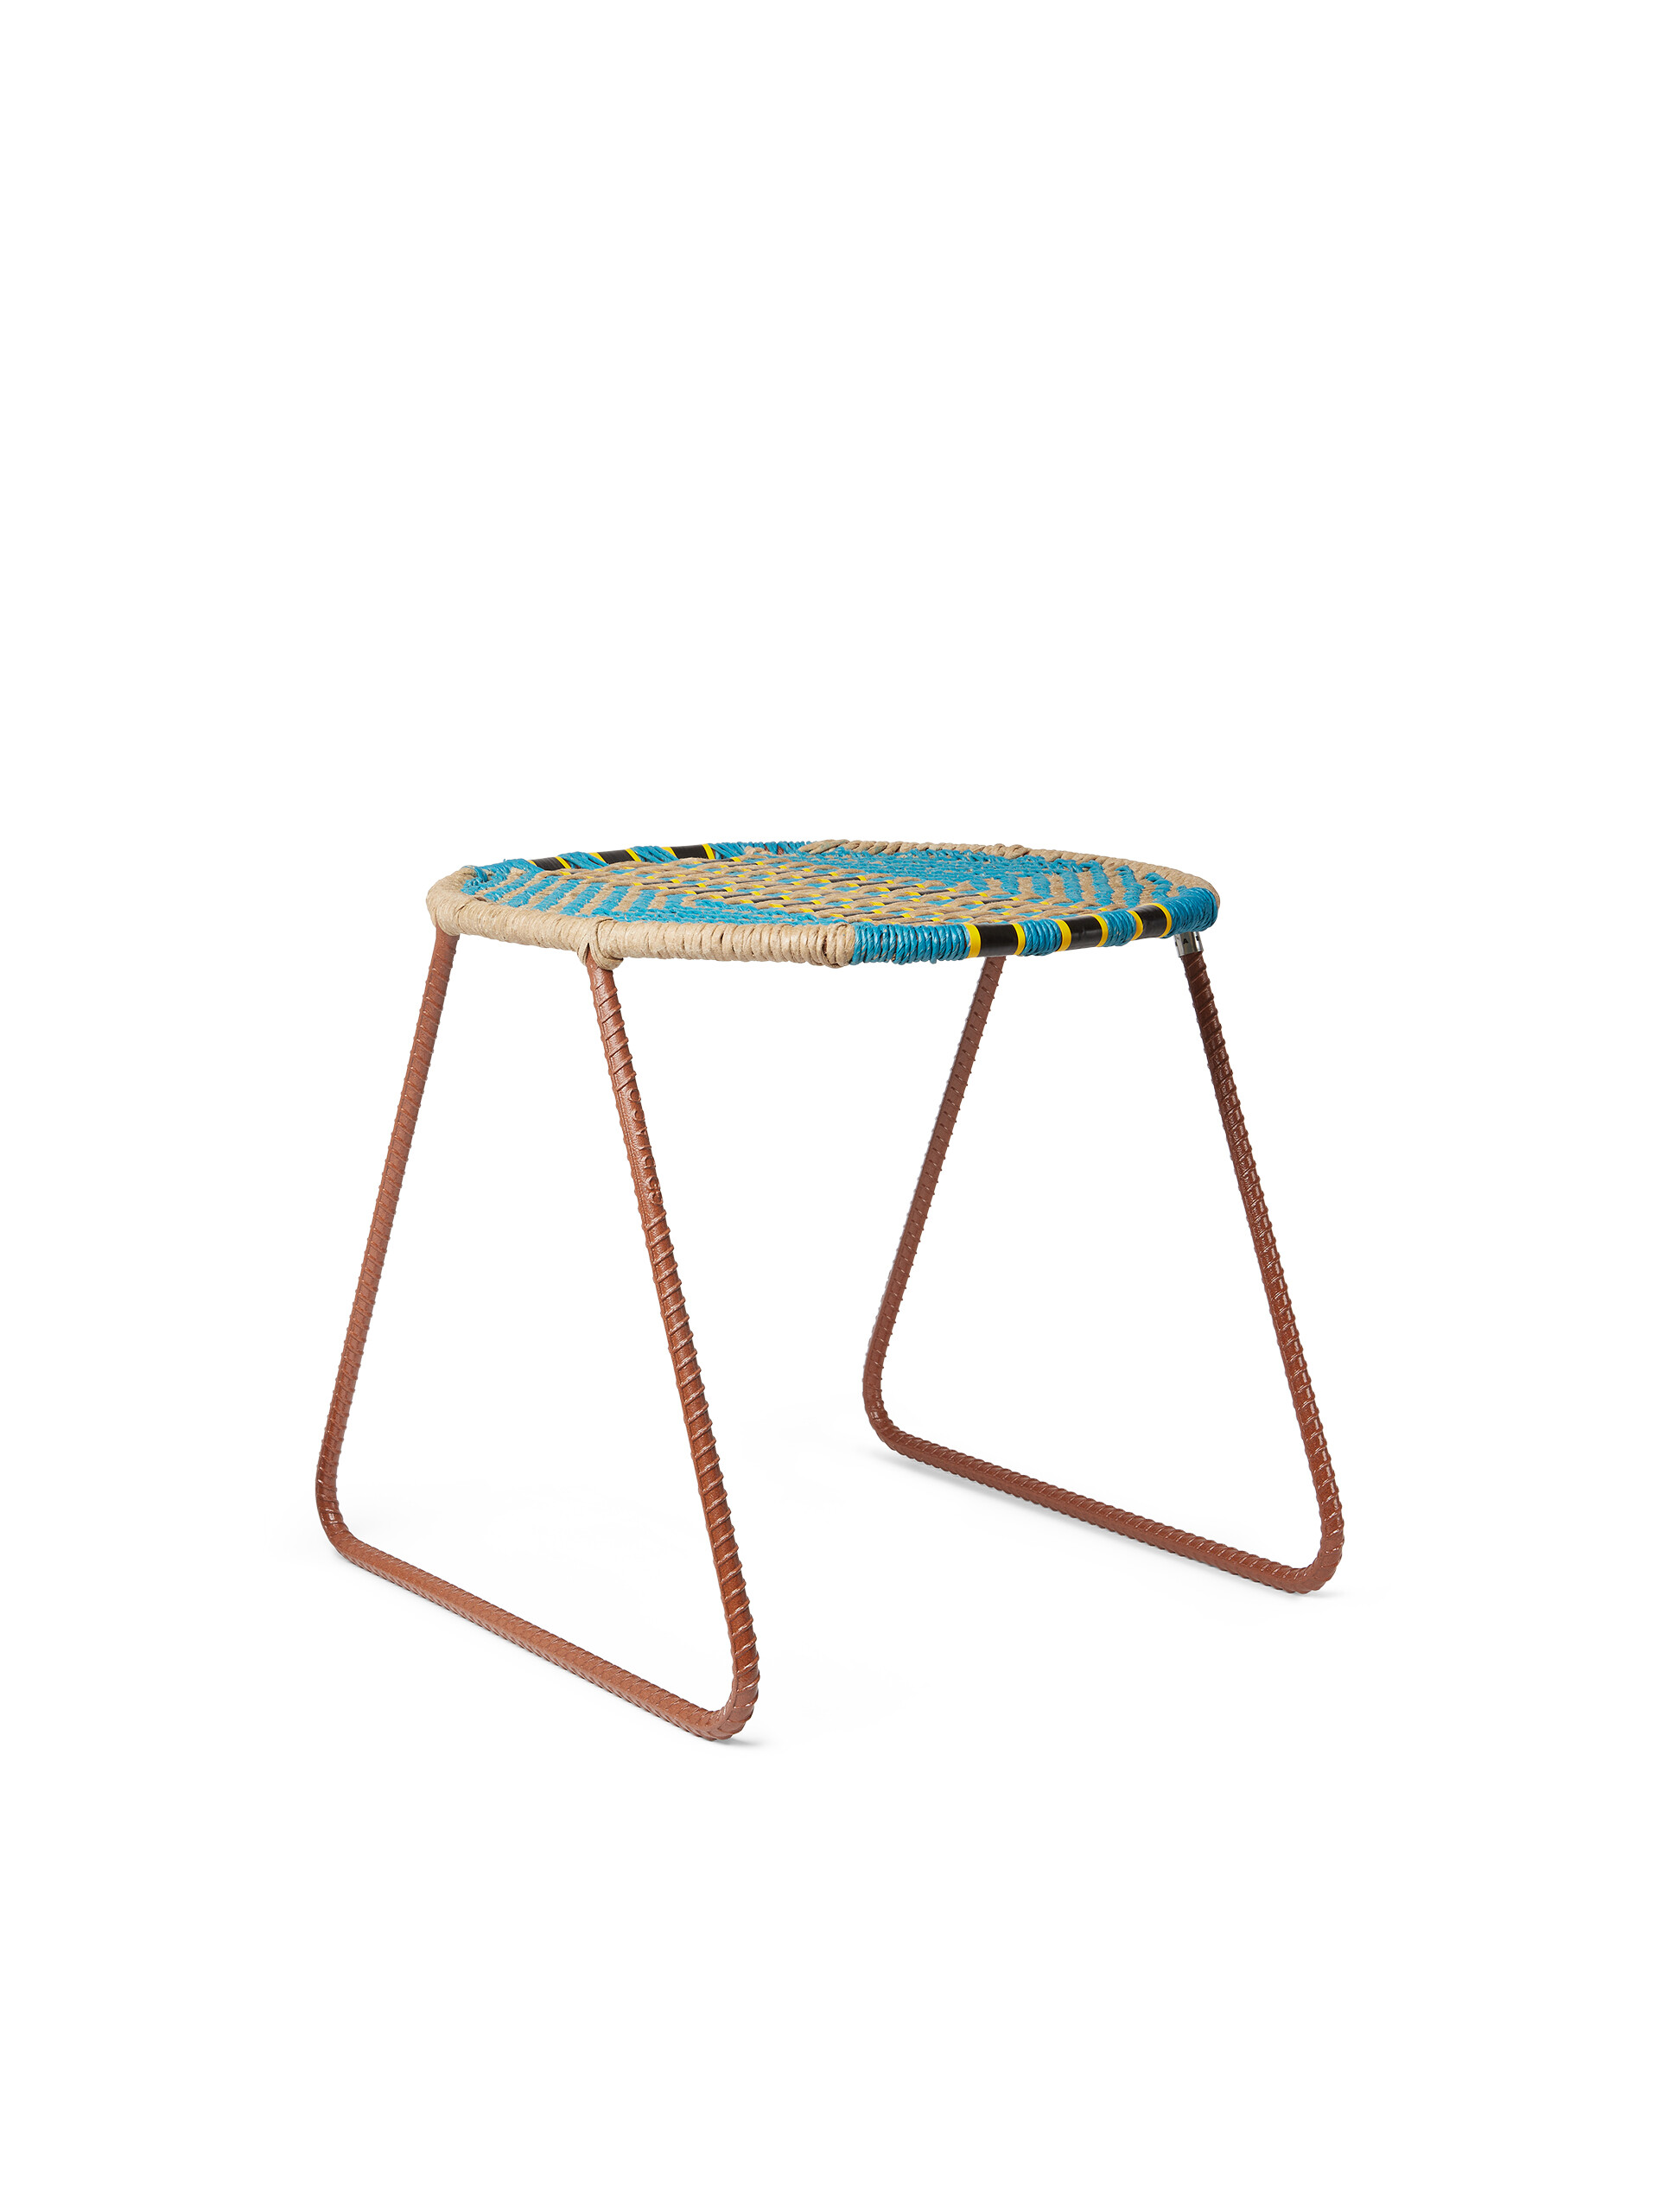 MARNI MARKET pale blue stool-table - Furniture - Image 2